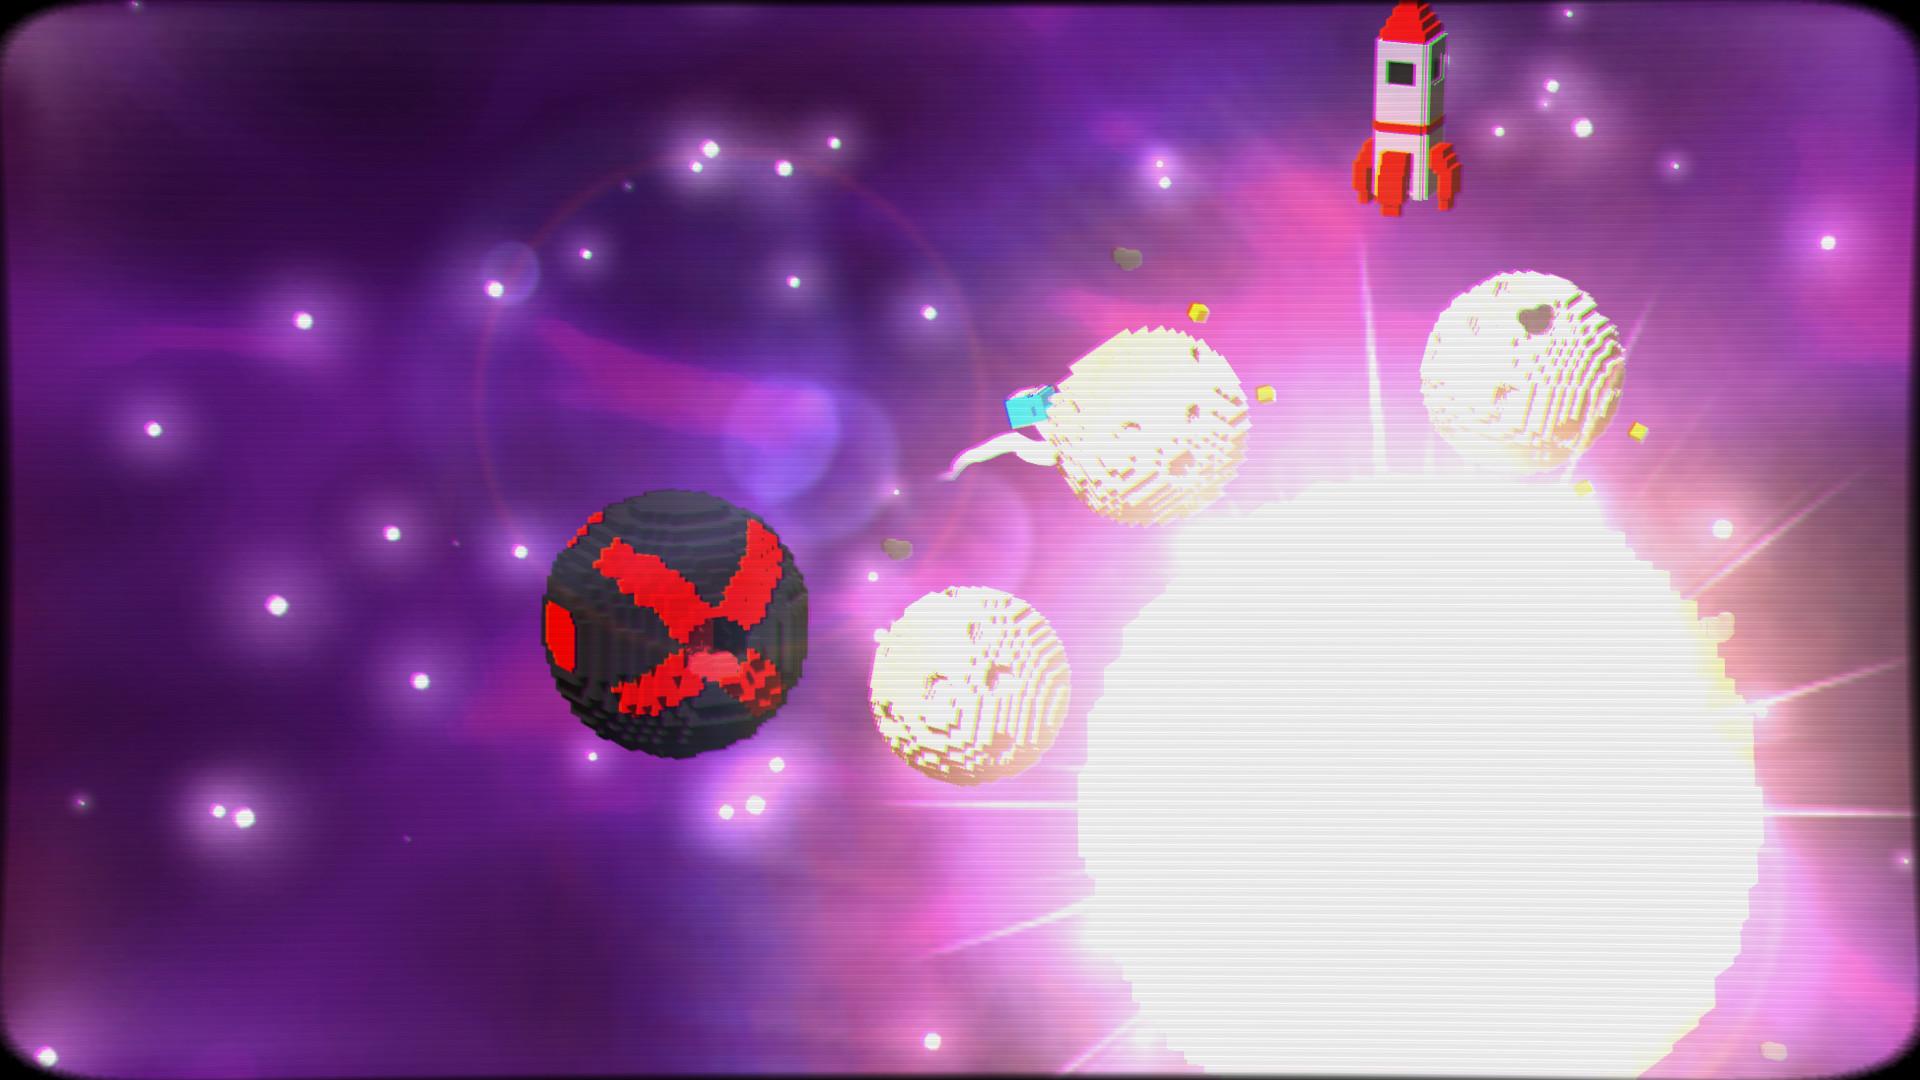 Screenshot №4 from game Cosmic Leap